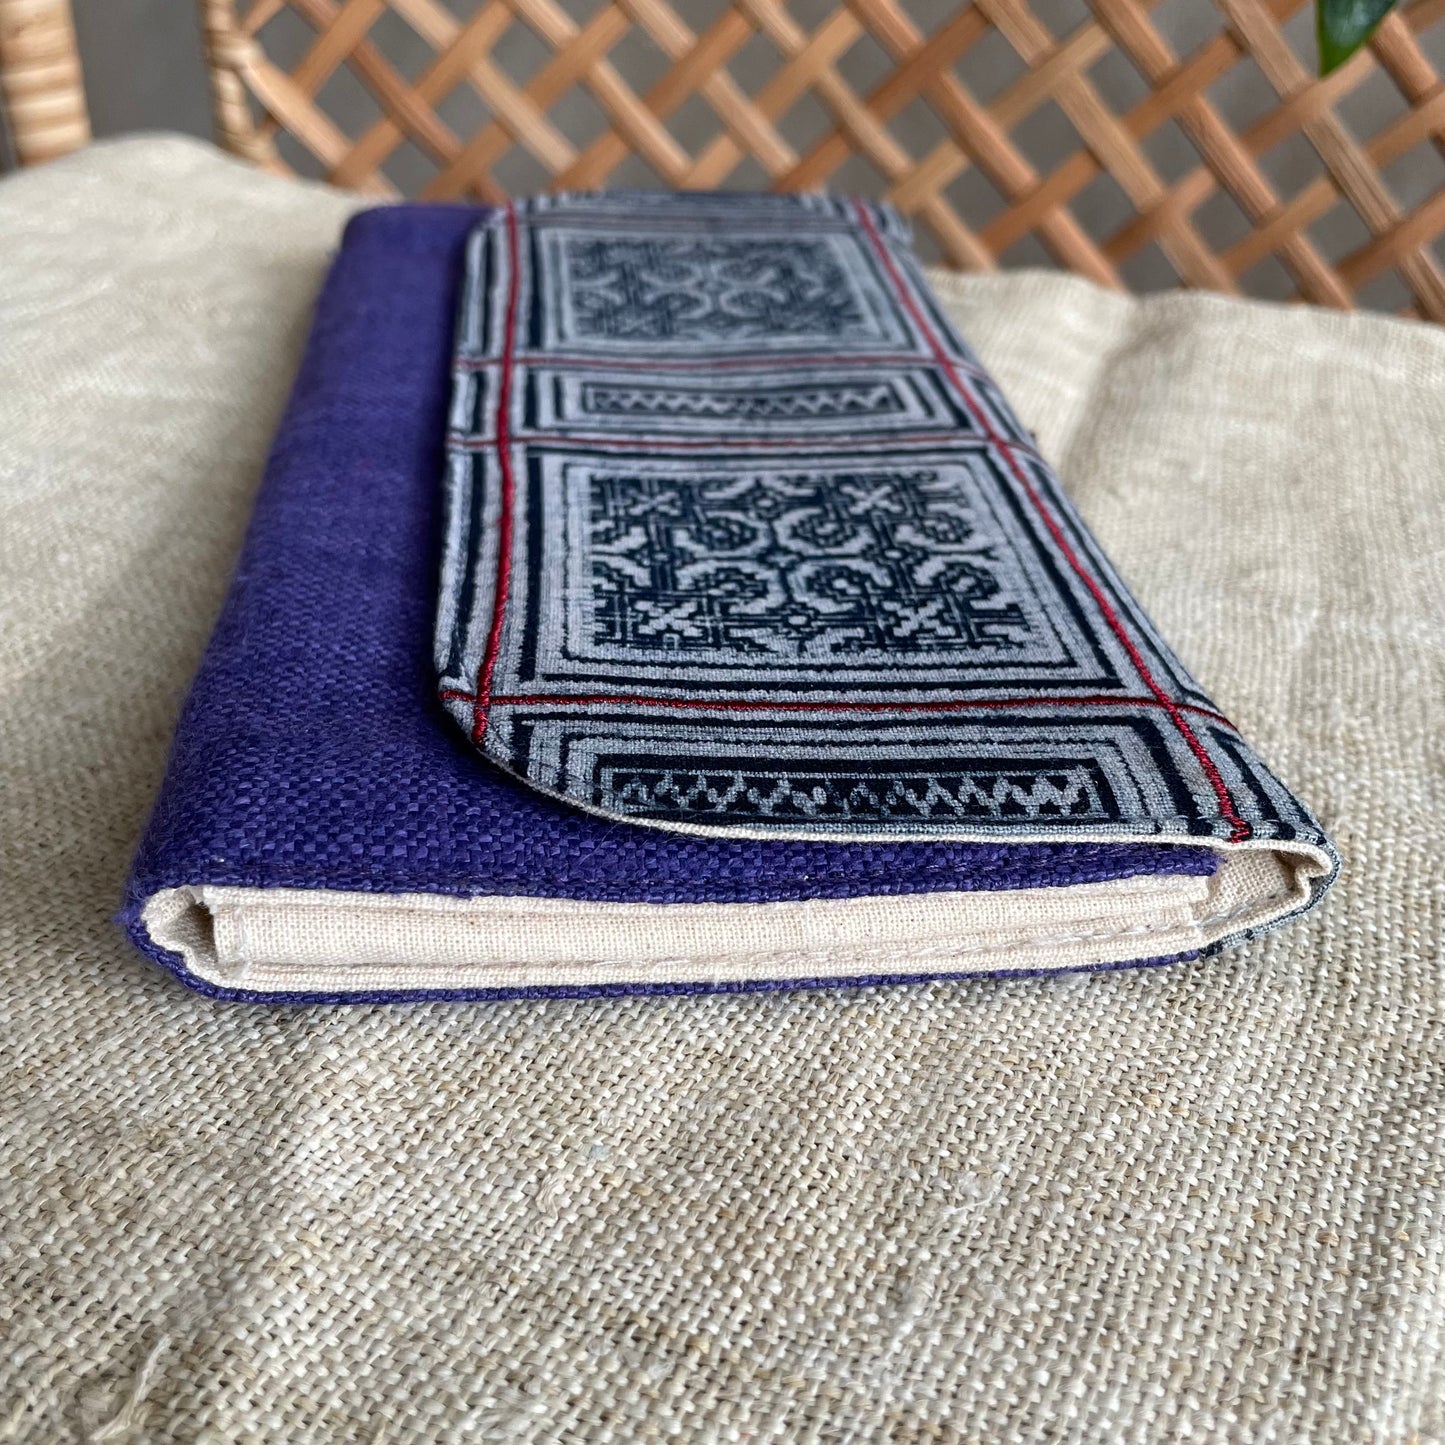 Purple long purse, Hemp fabric, Indigo Batik fabric, H'mong pattern